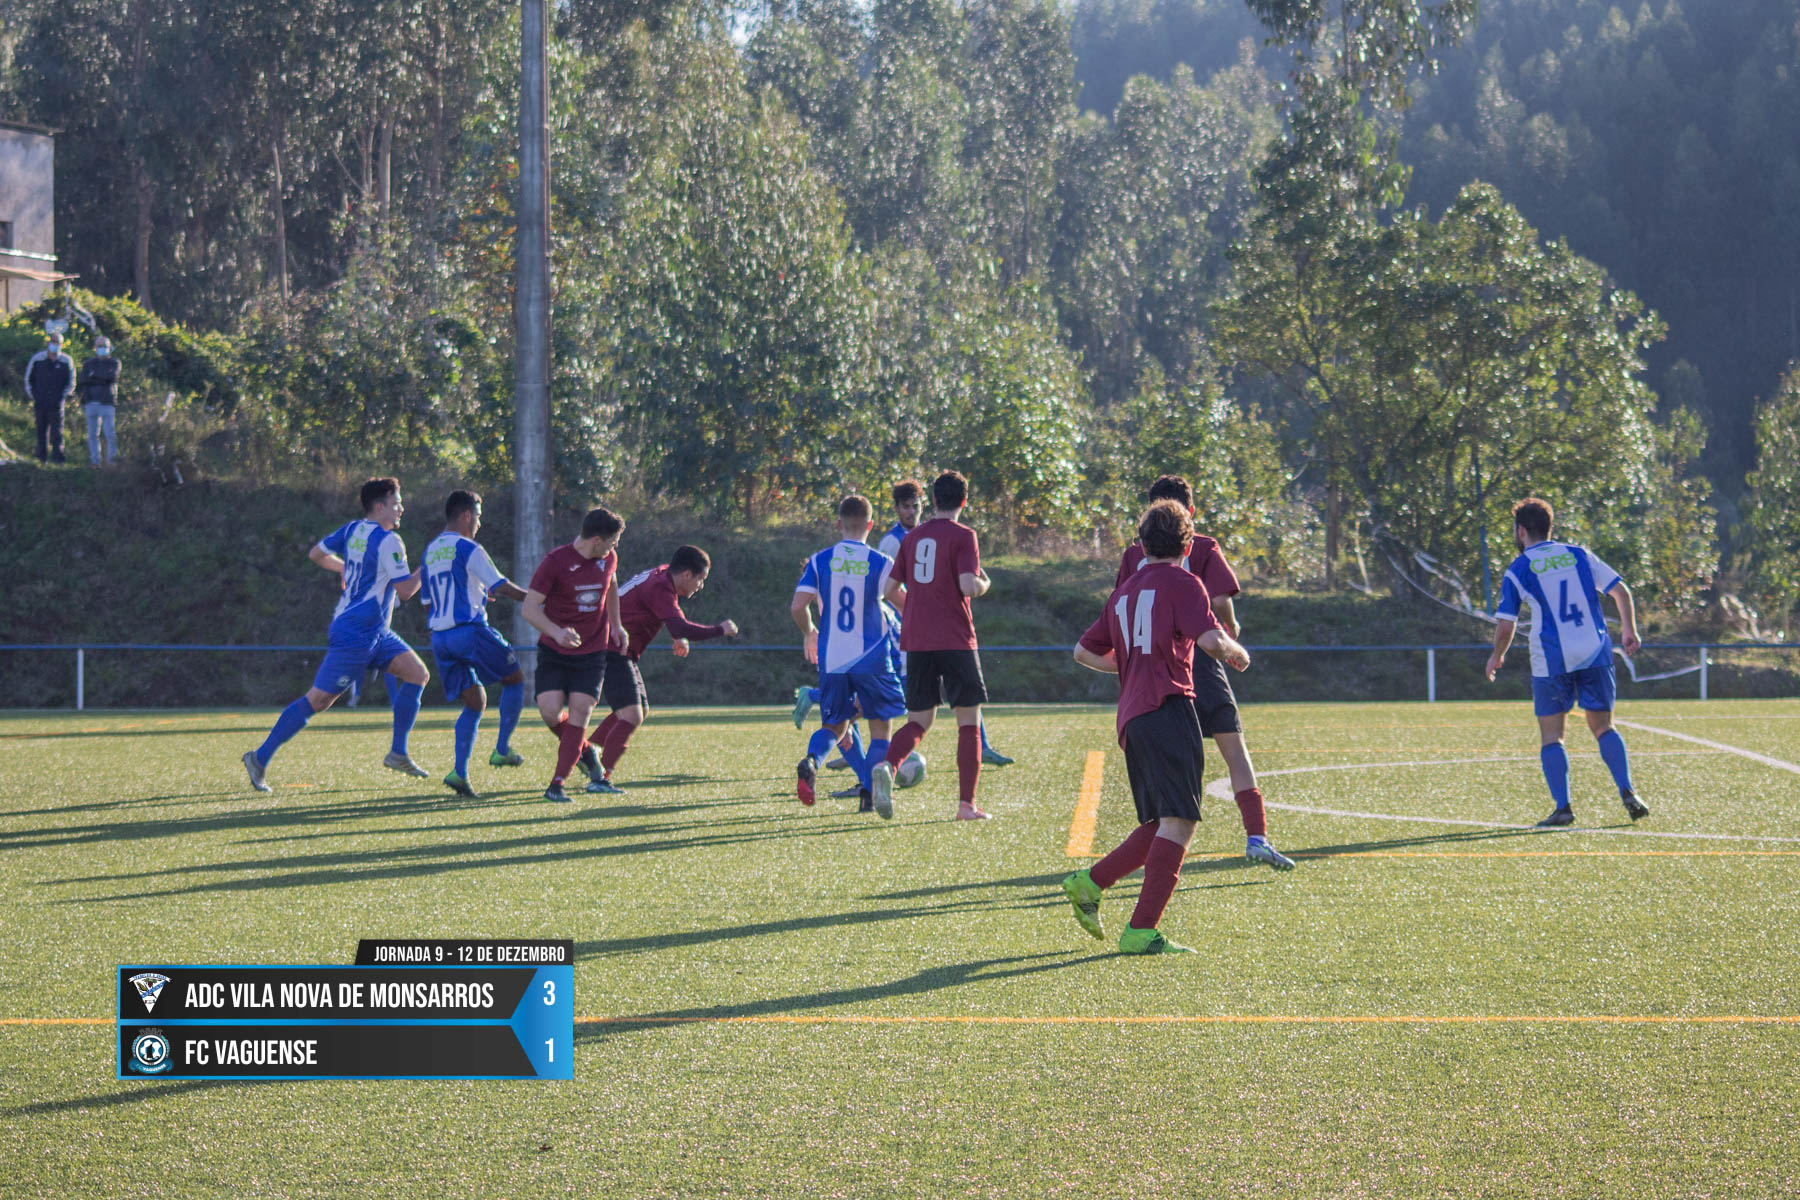 ADC Vila Nova de Monsarros 3-1 FC Vaguense